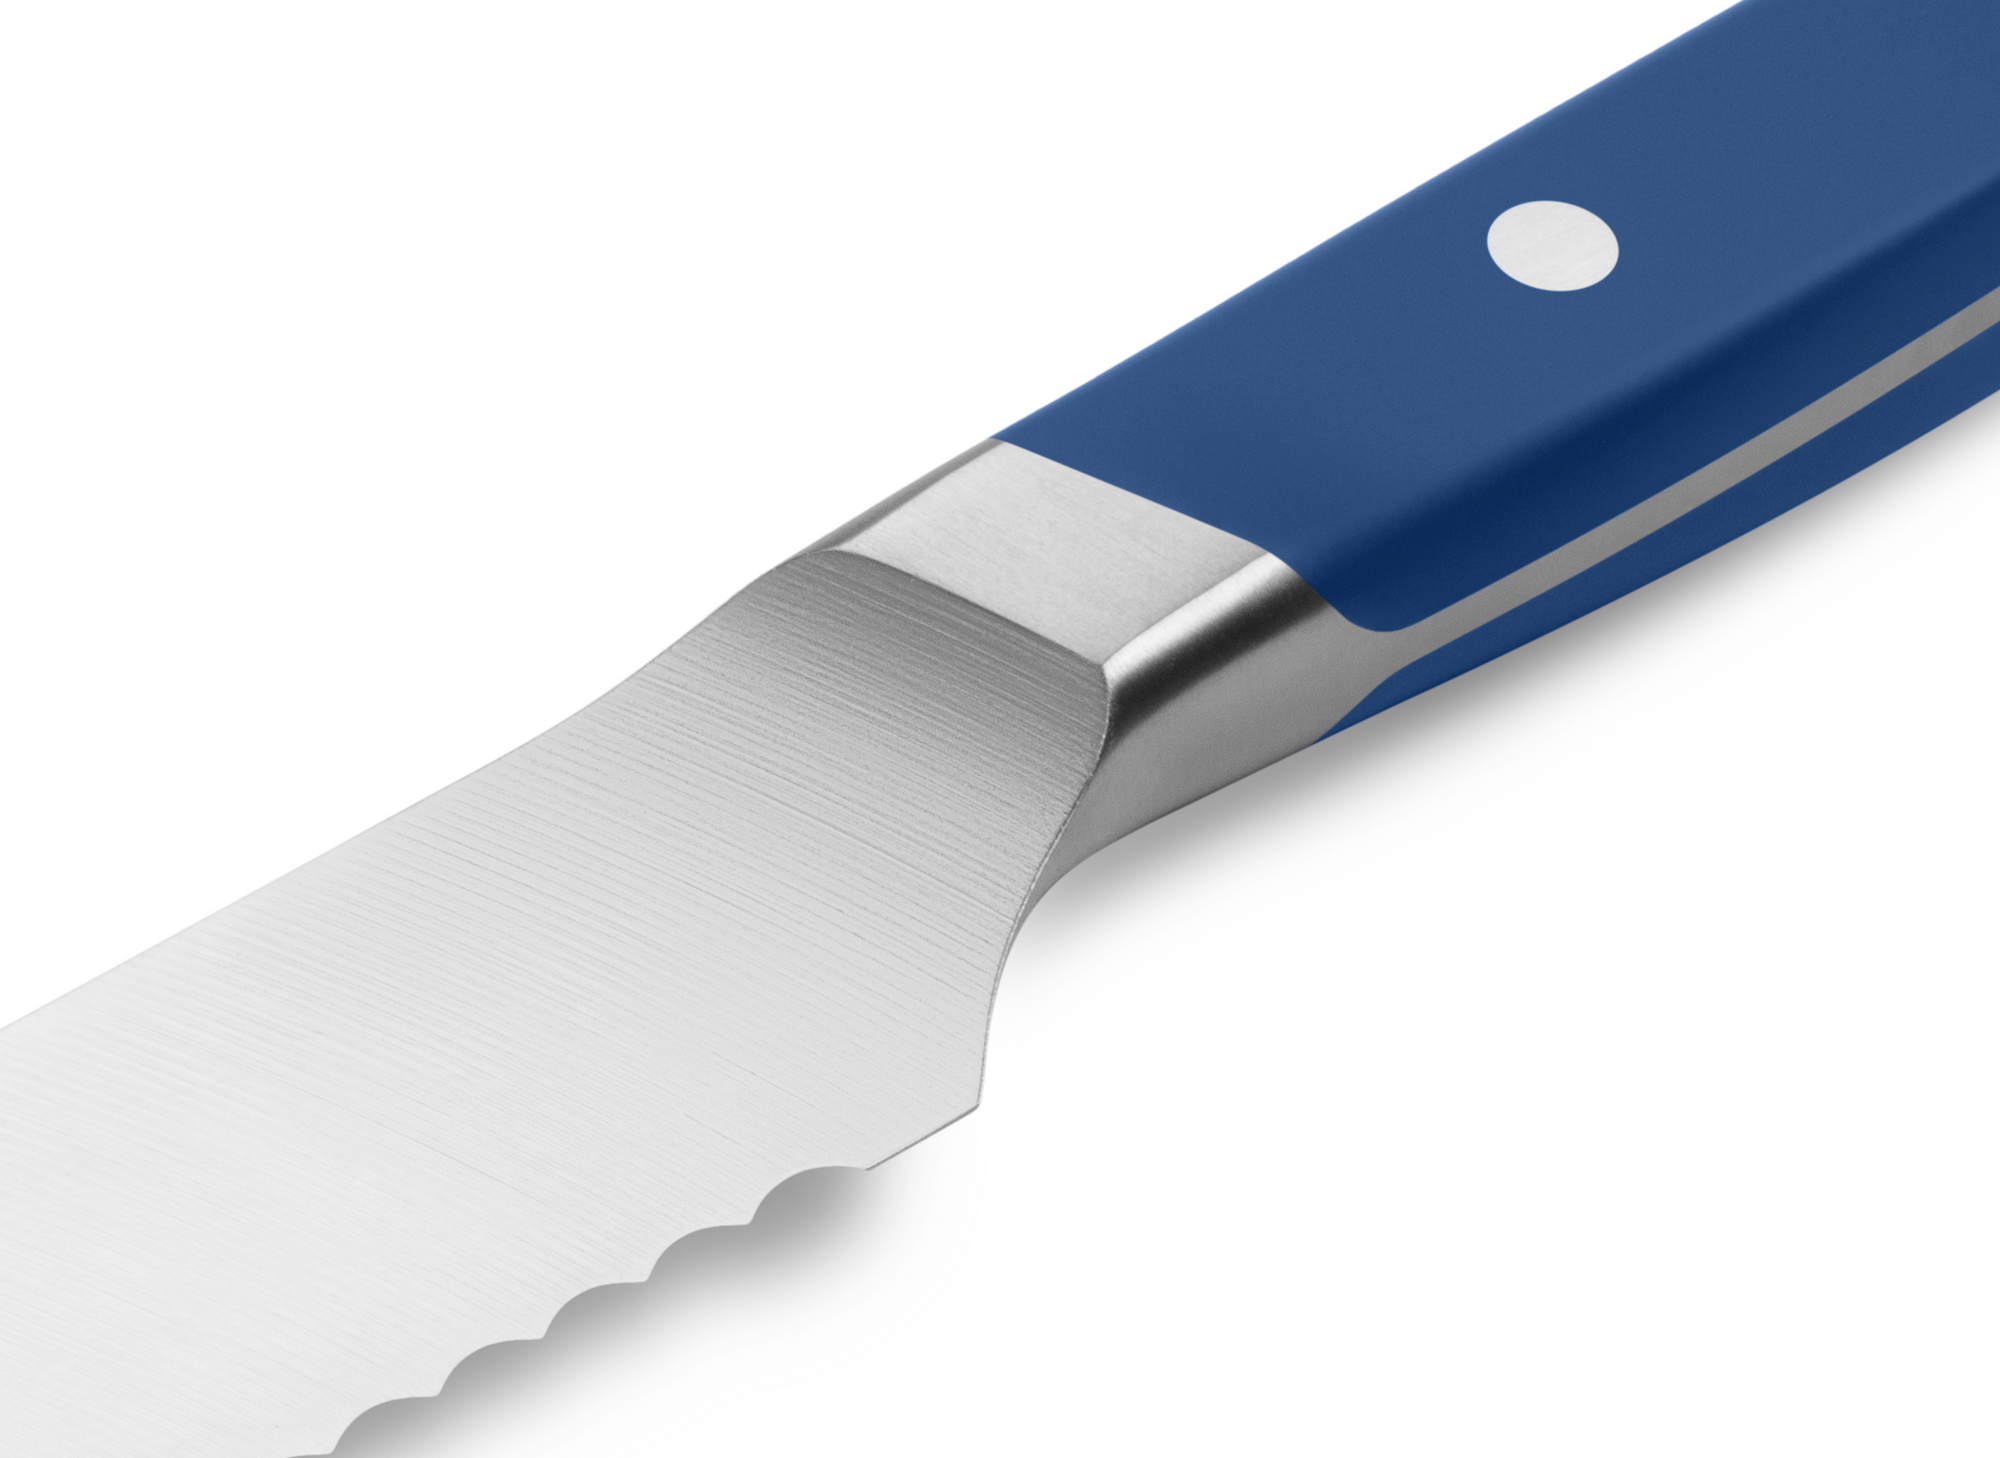  MOSFiATA Bread Knife 8” Ultra Sharp Serrated Knife